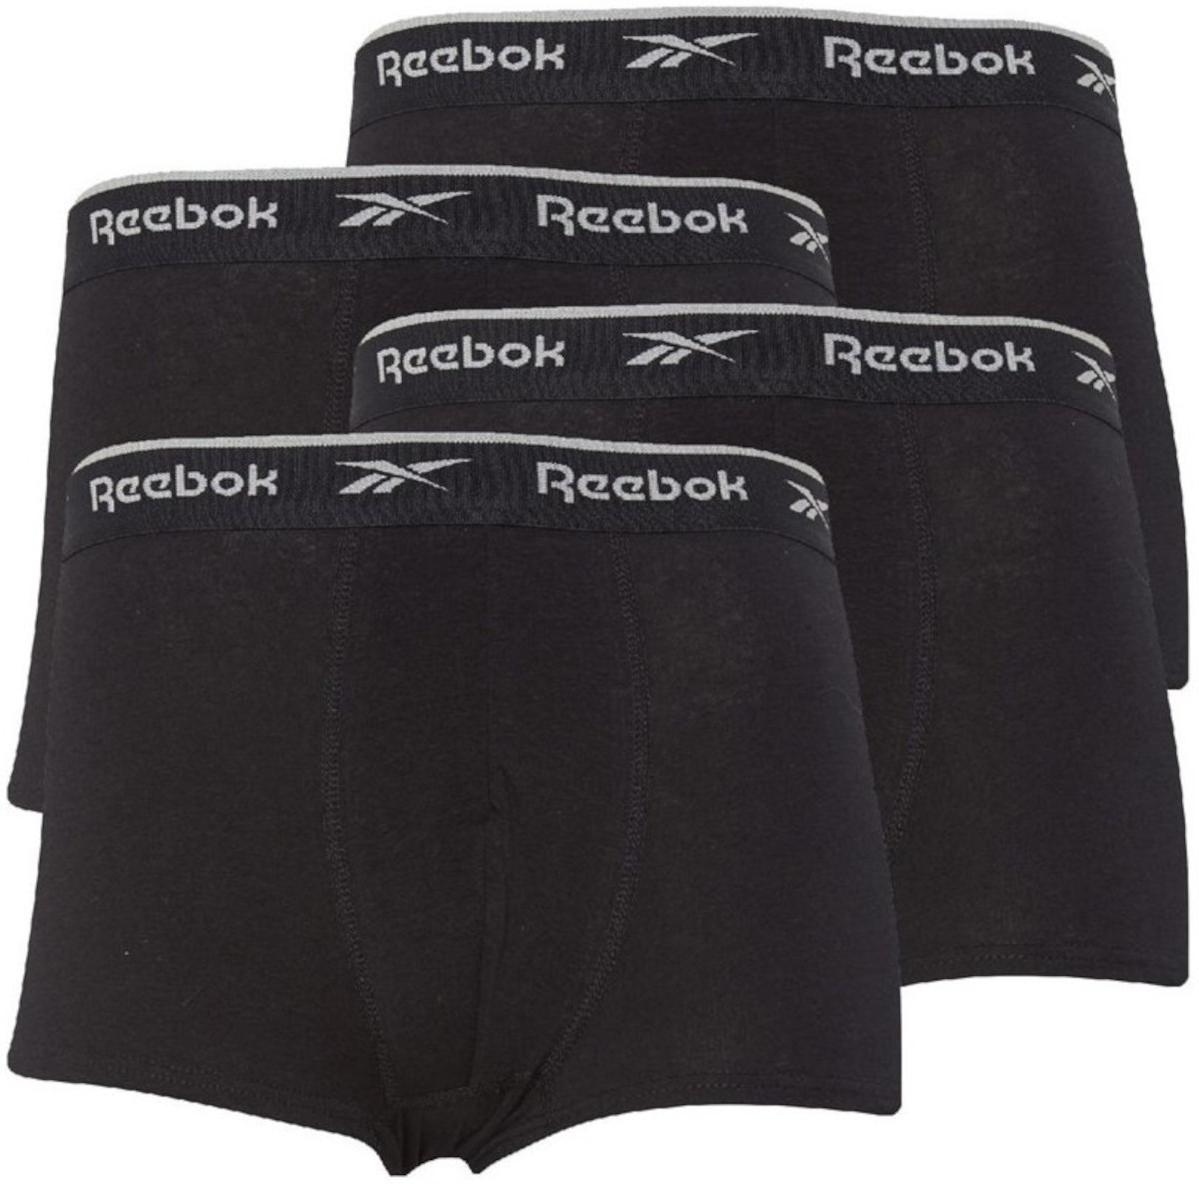 Boxer shorts Reebok 4Pack Trunk OVETT Boxers